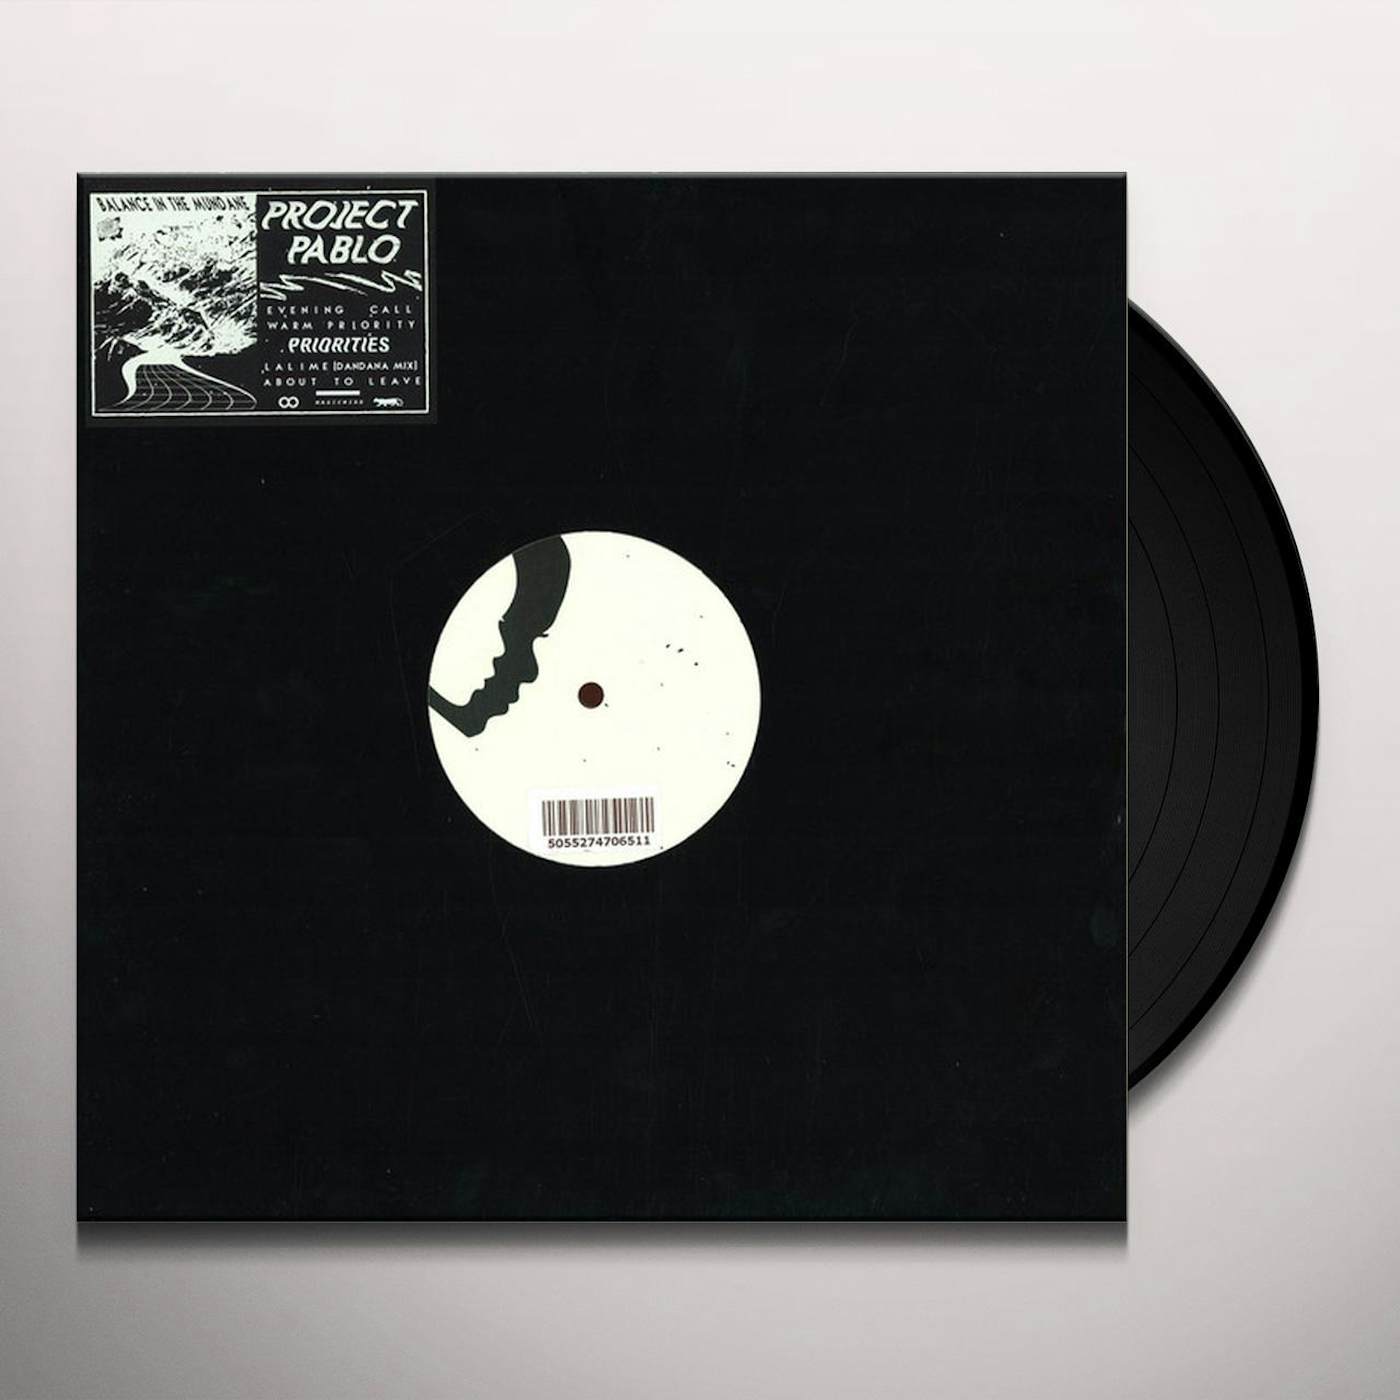 Project Pablo PRIORITIES Vinyl Record - UK Release